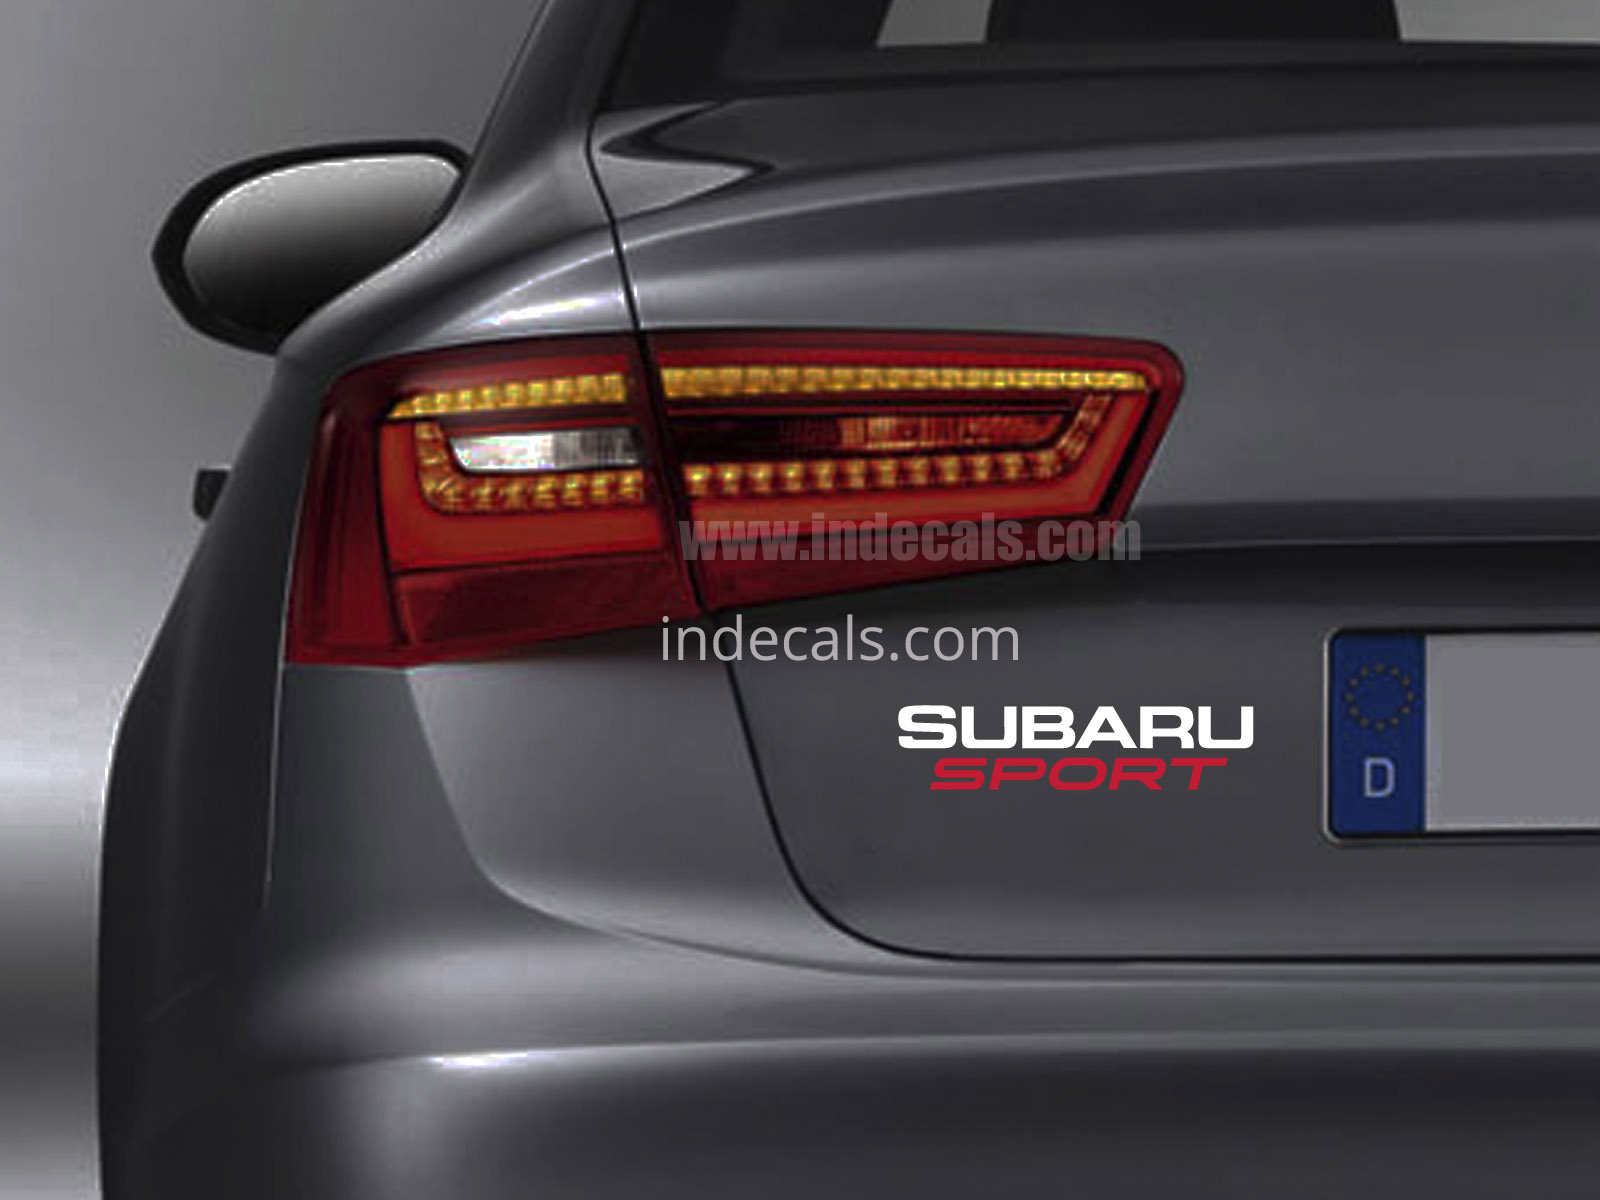 1 x Subaru Sports Sticker for Trunk - White & Red